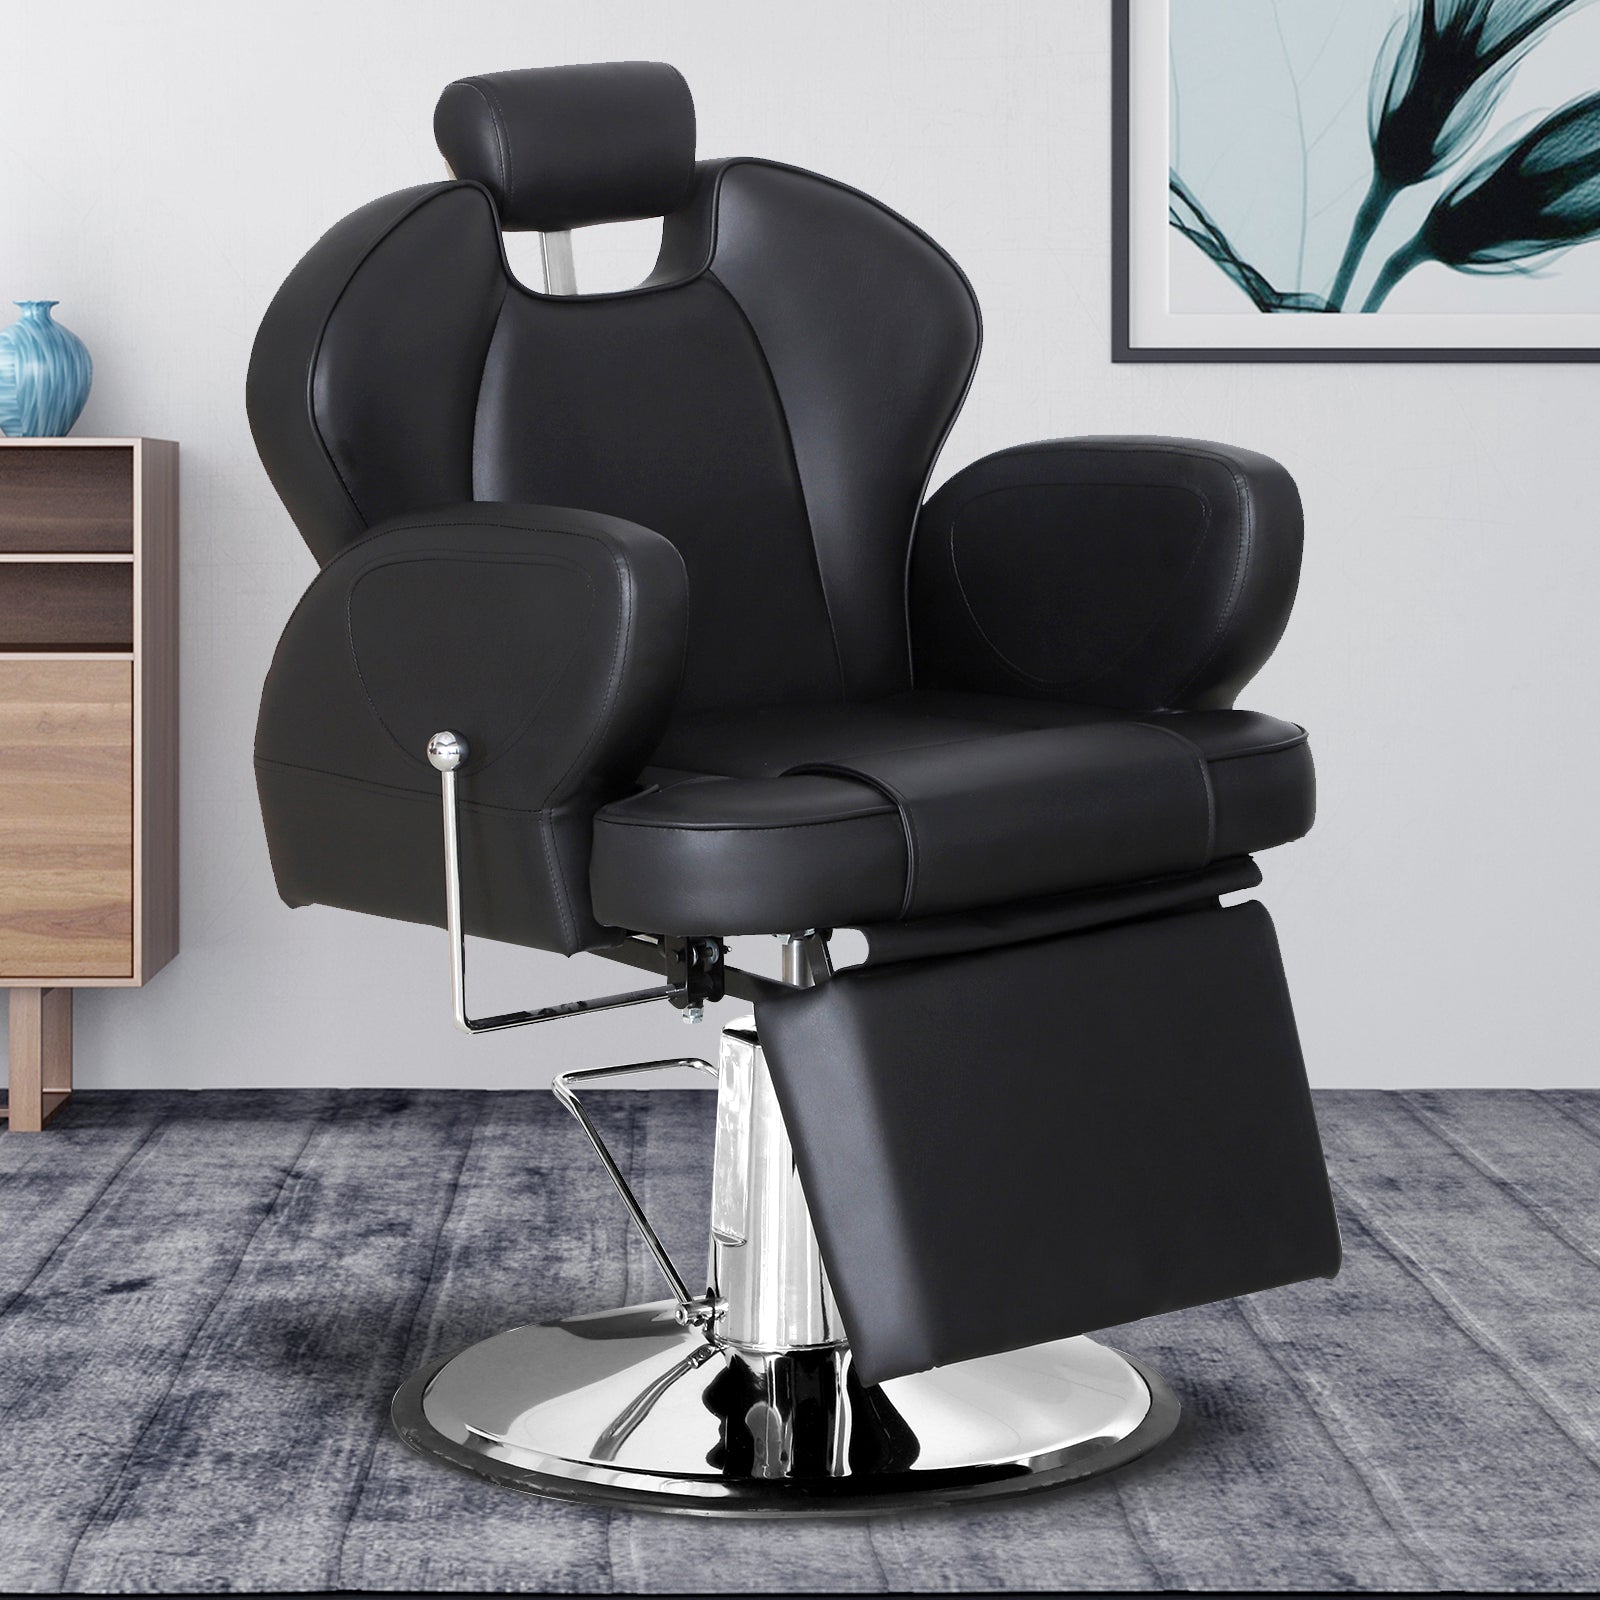 BarberPub Hydraulic Barber Chair Recline Professional Salon Beauty Spa Styling Equipment 2692 Black